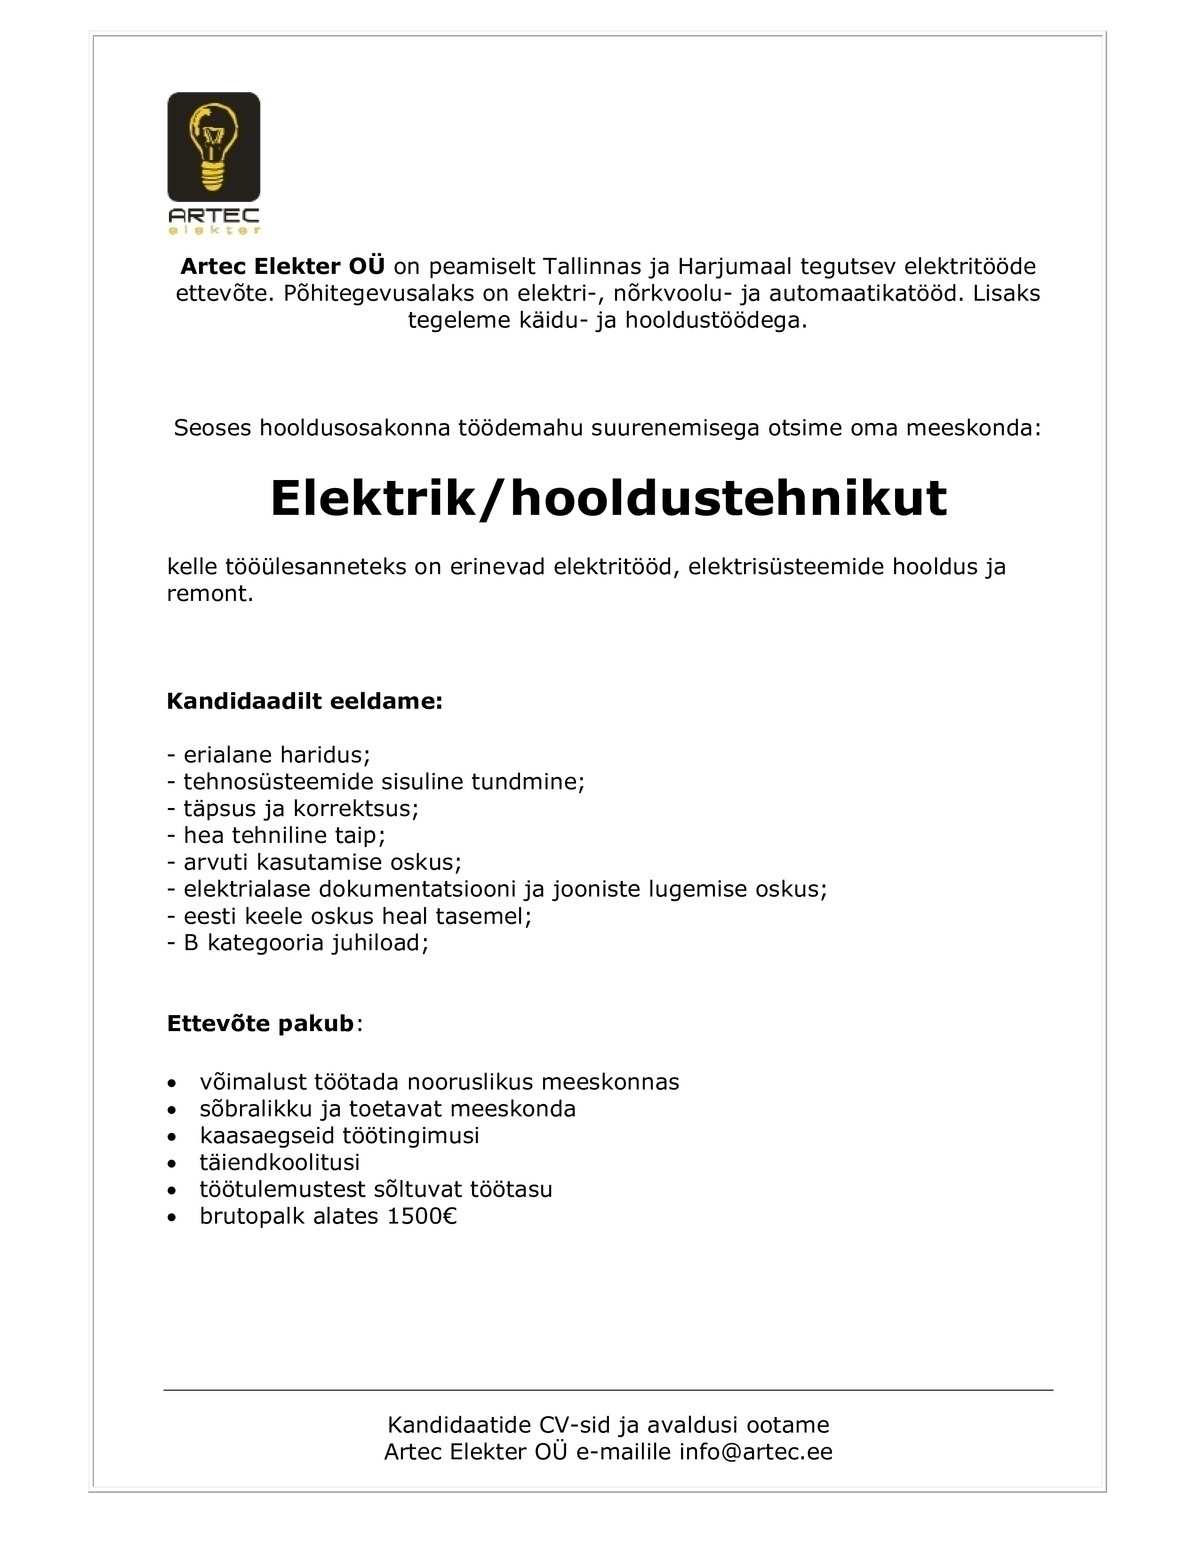 ARTEC ELEKTER OÜ Elektrik / hooldustehnik